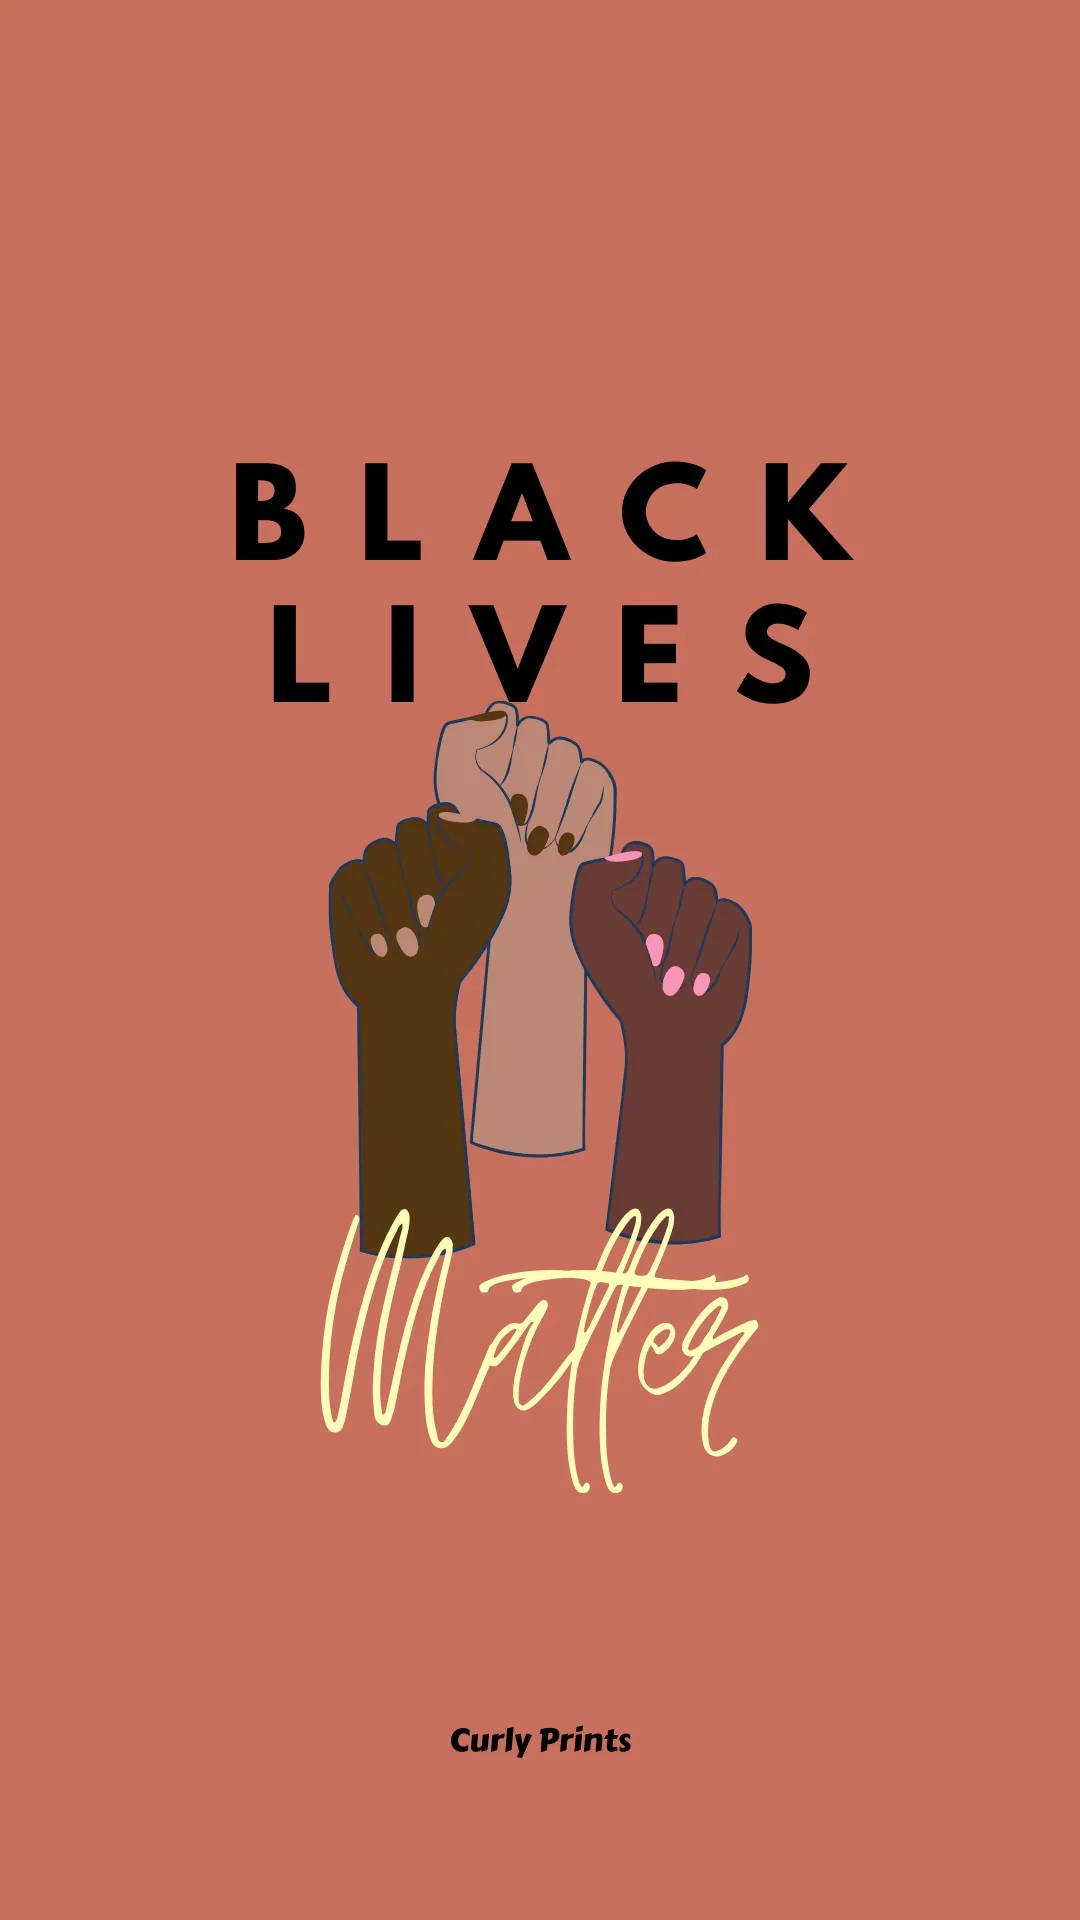 Top 999+ Black Lives Matter Wallpaper Full HD, 4K✅Free to Use